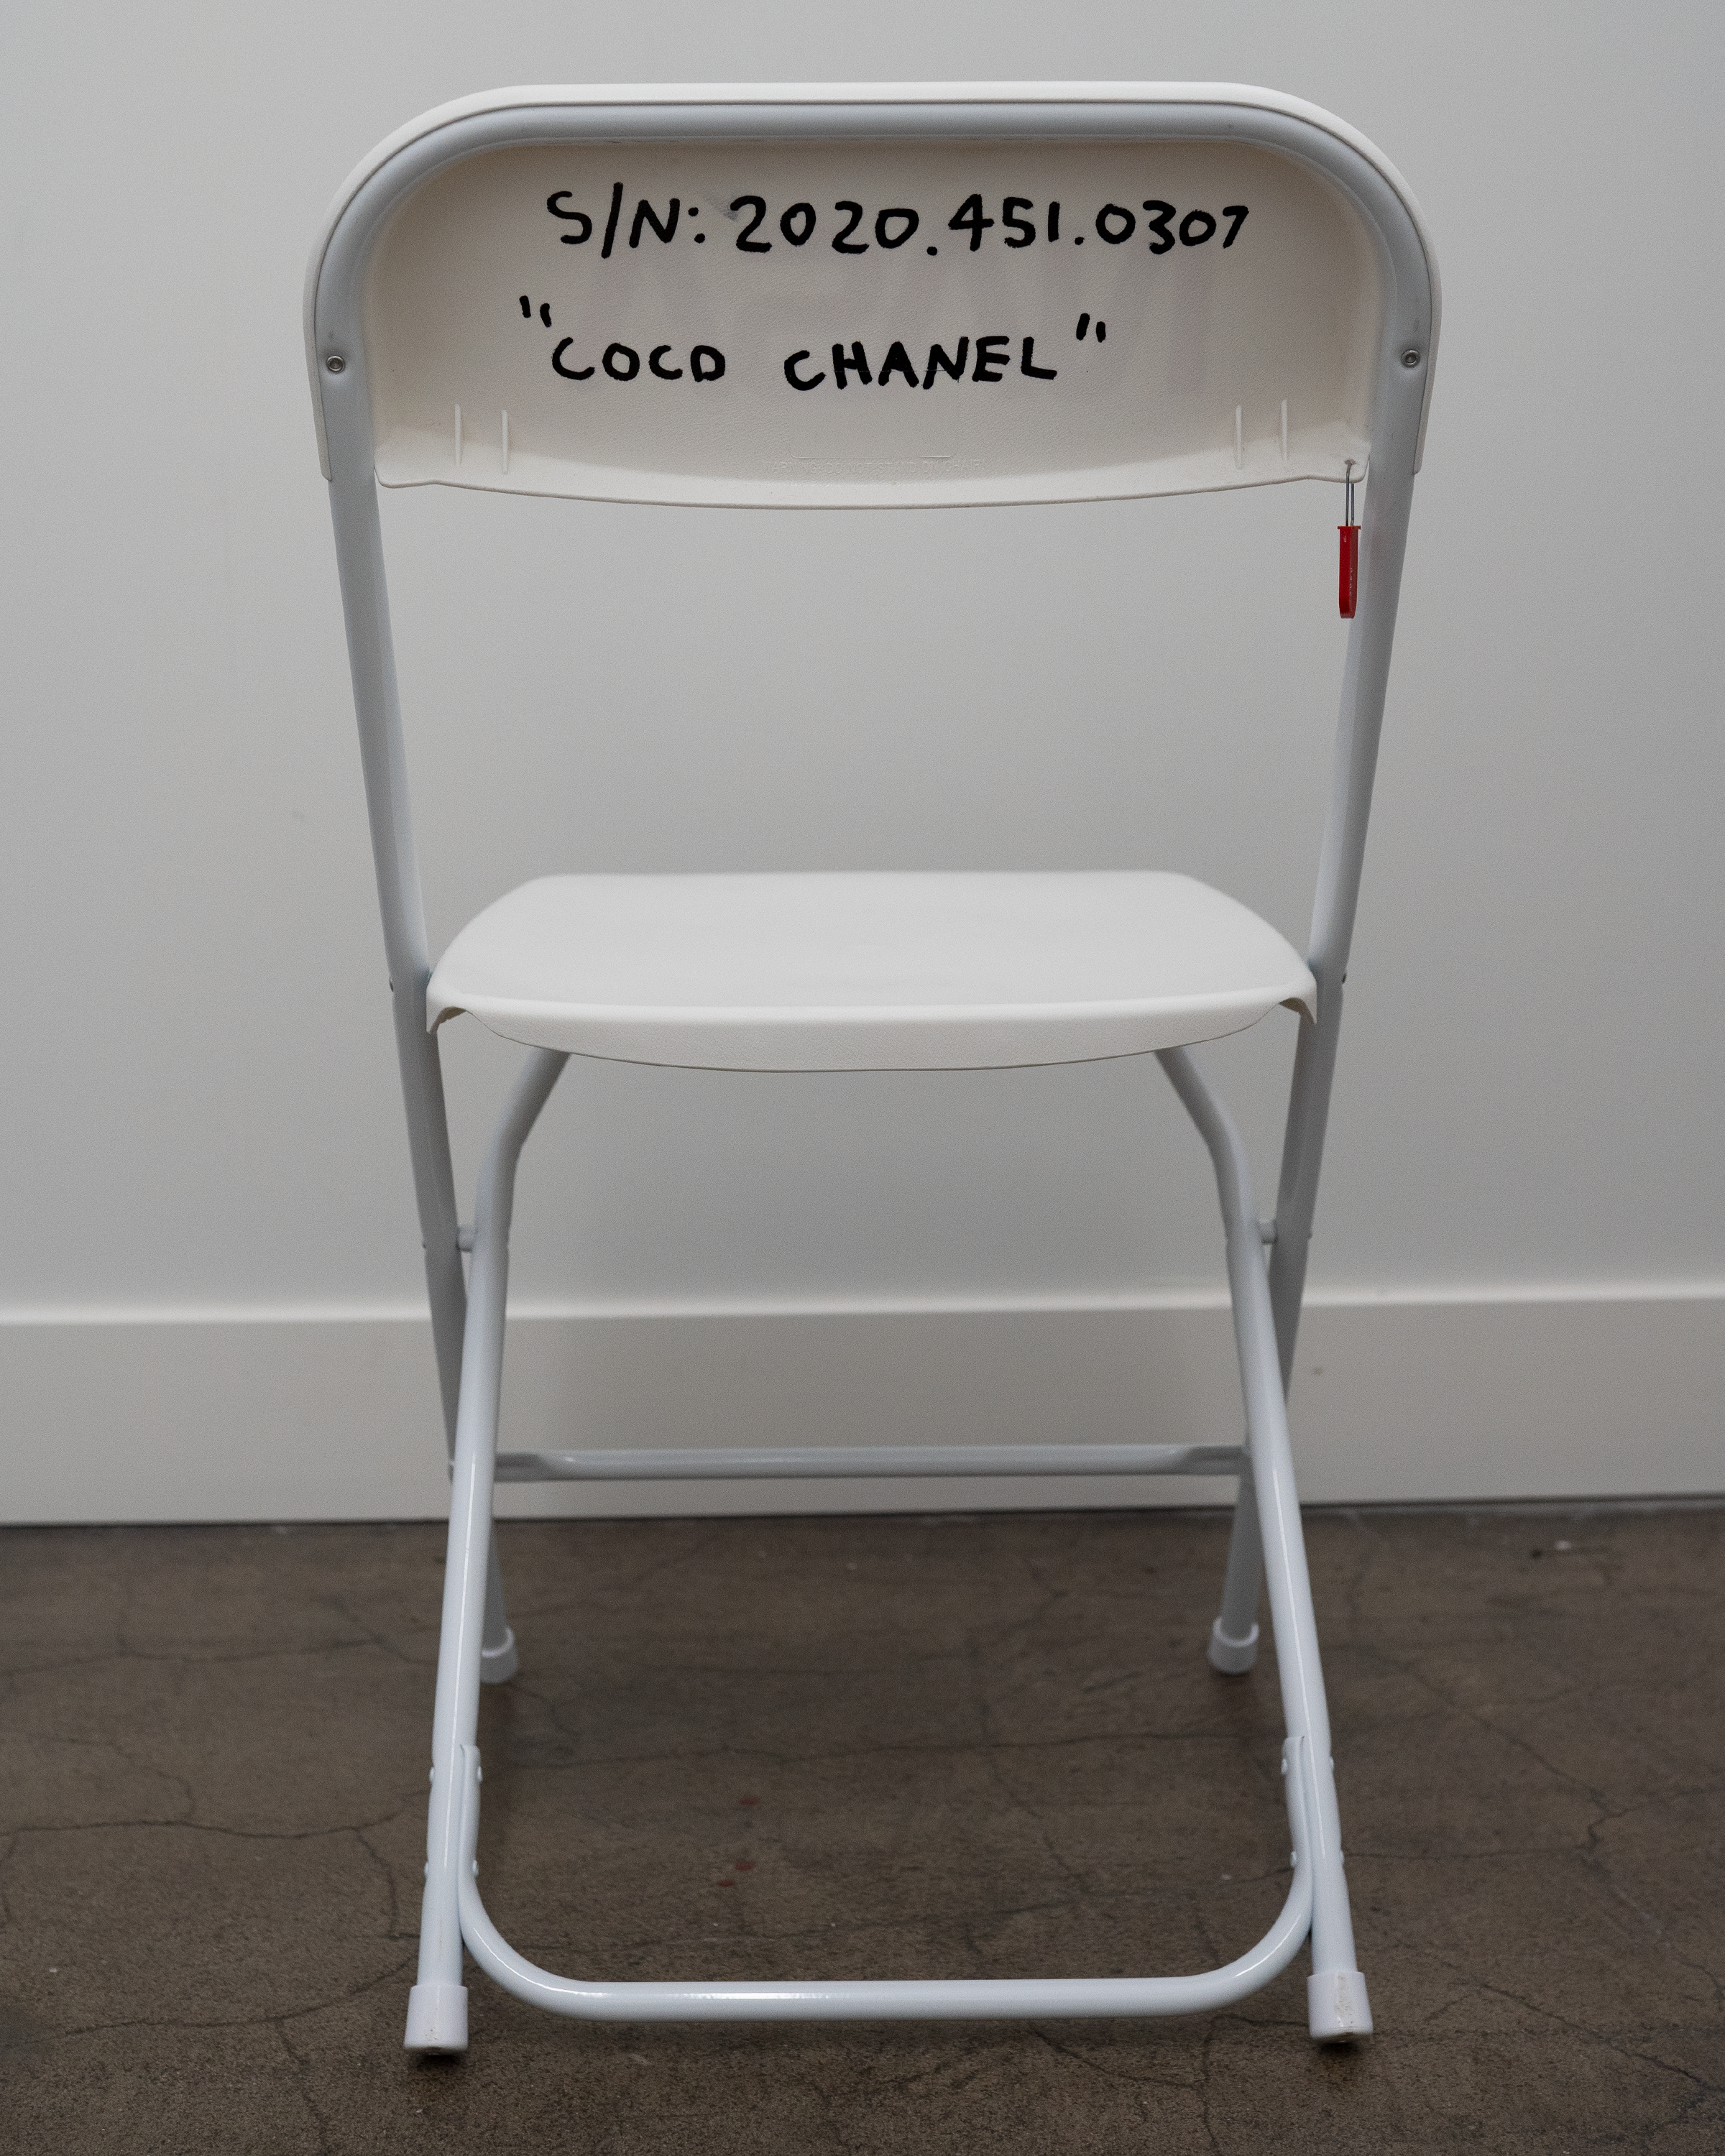 NASA Chair "Coco Chanel"